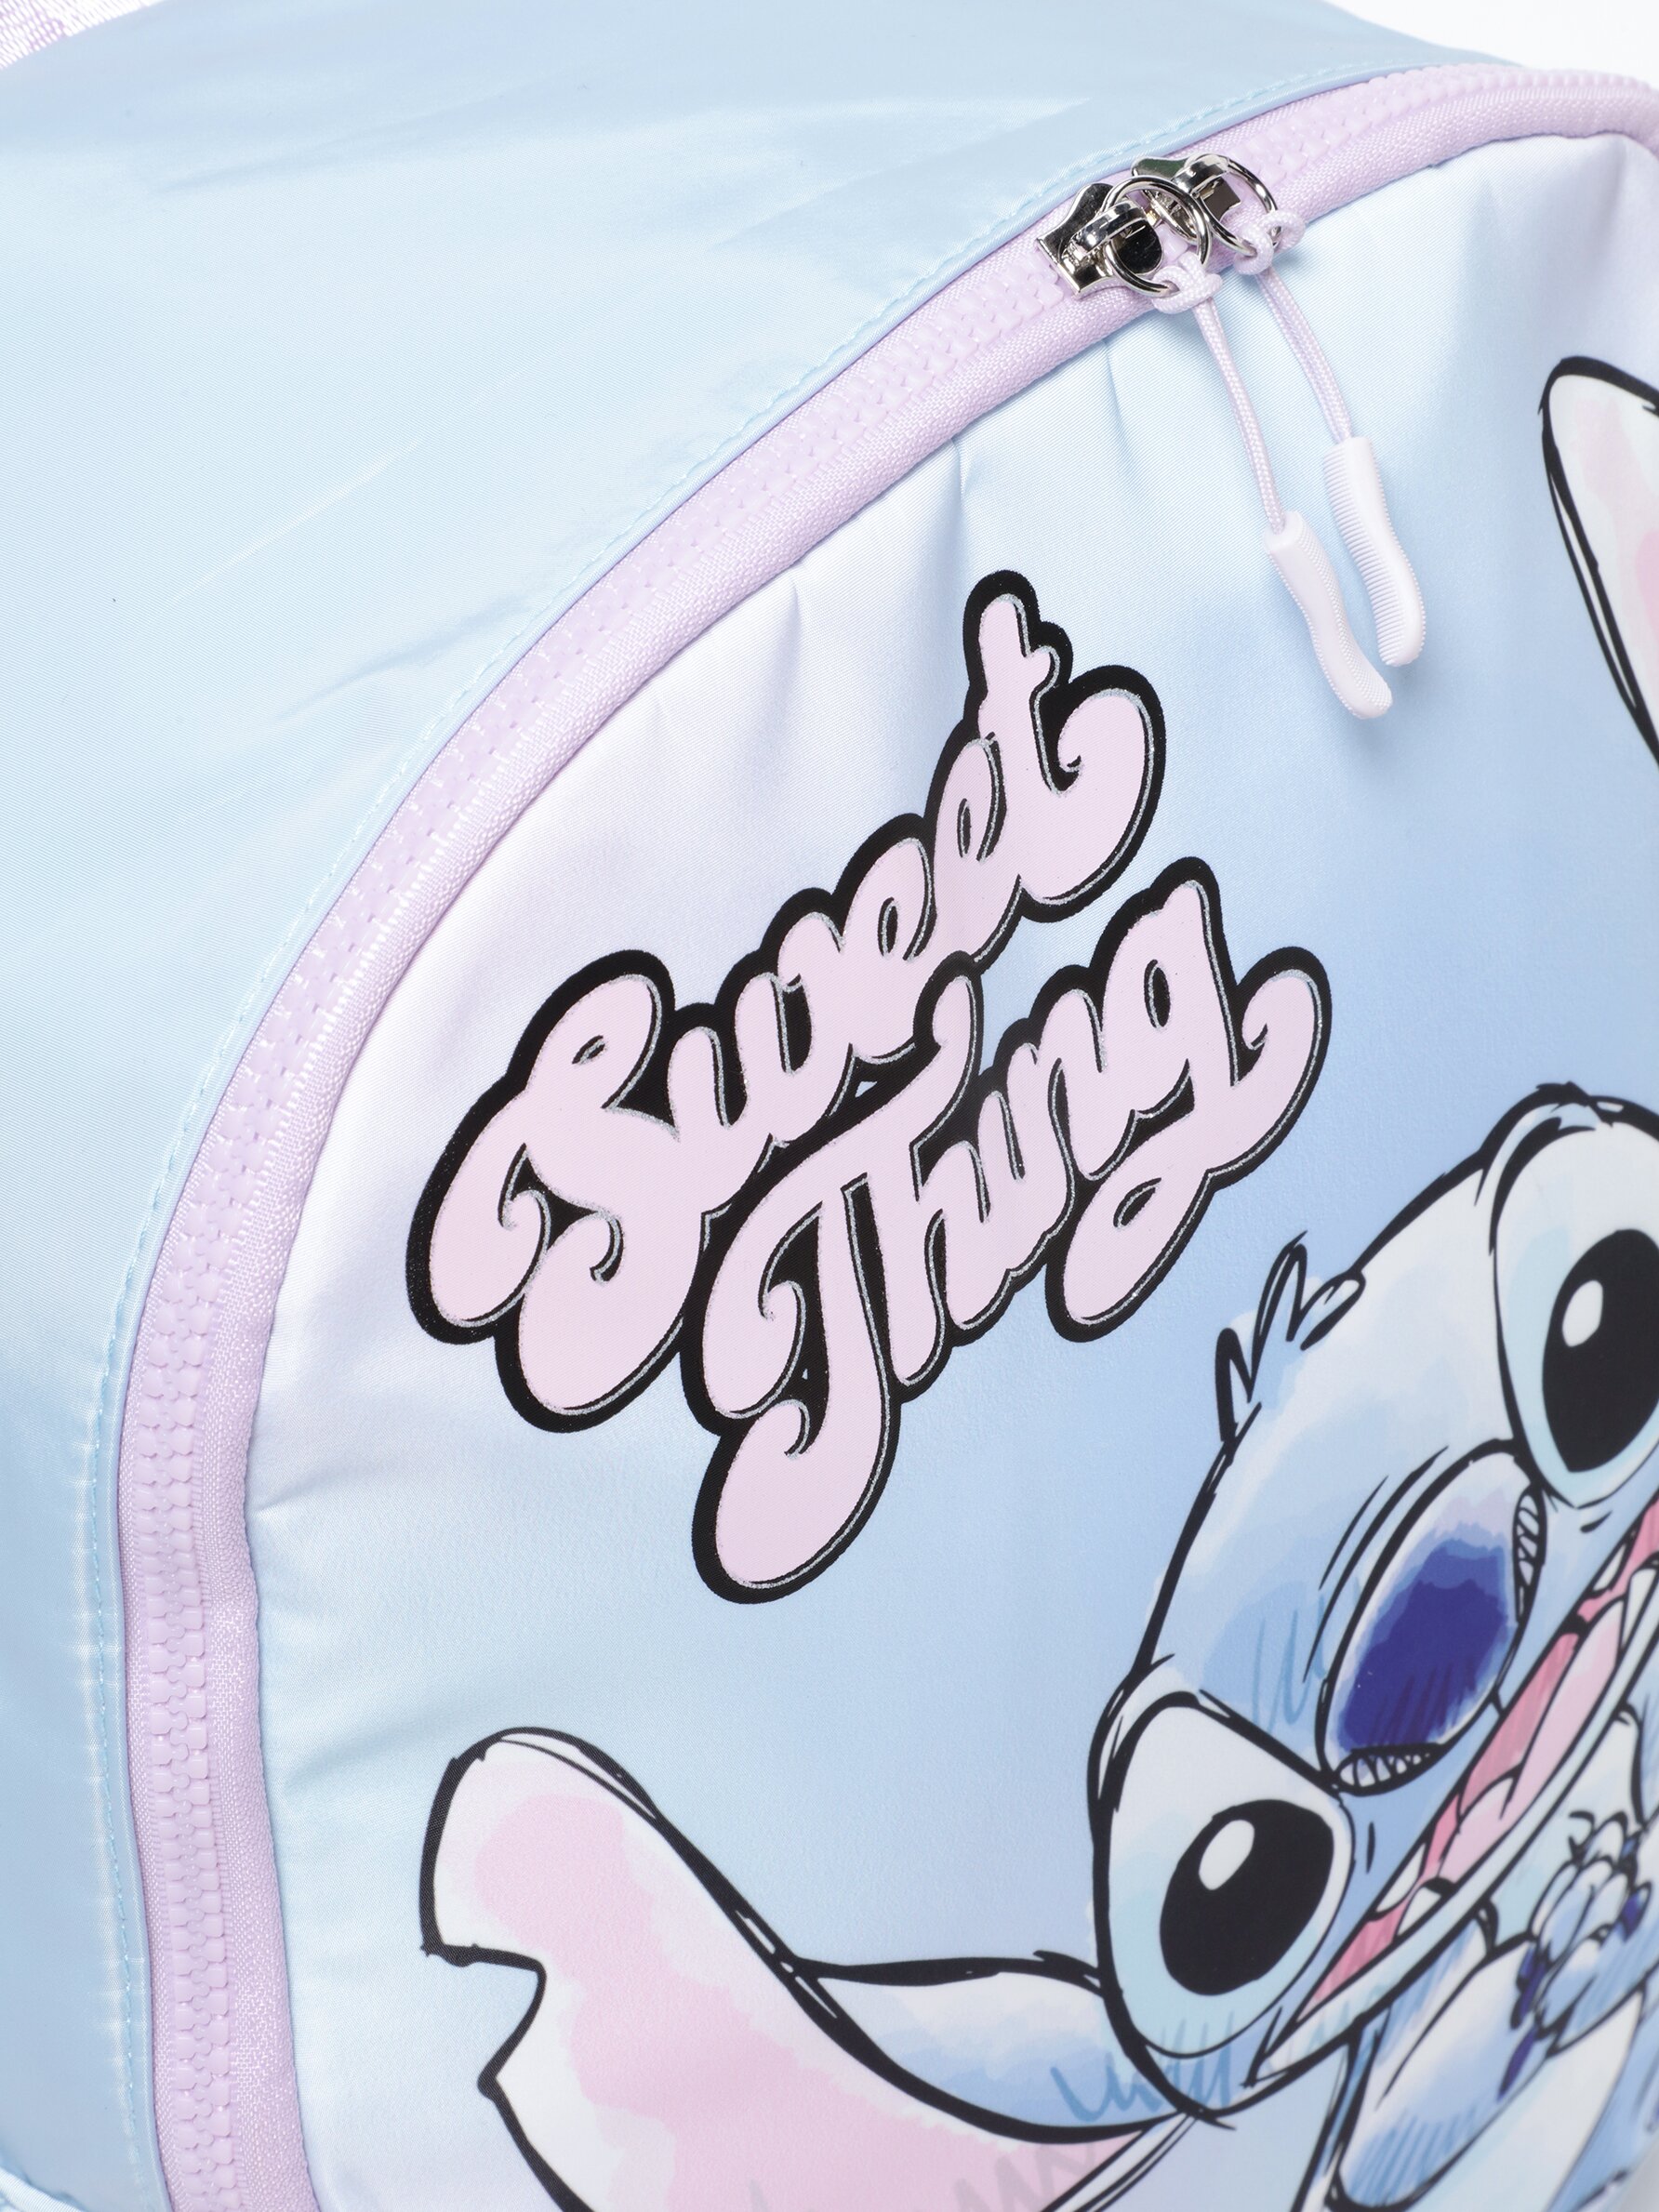 Disney Lilo and Stitch Girls Backpack, Kids Schoolbag, Rucksack Blue